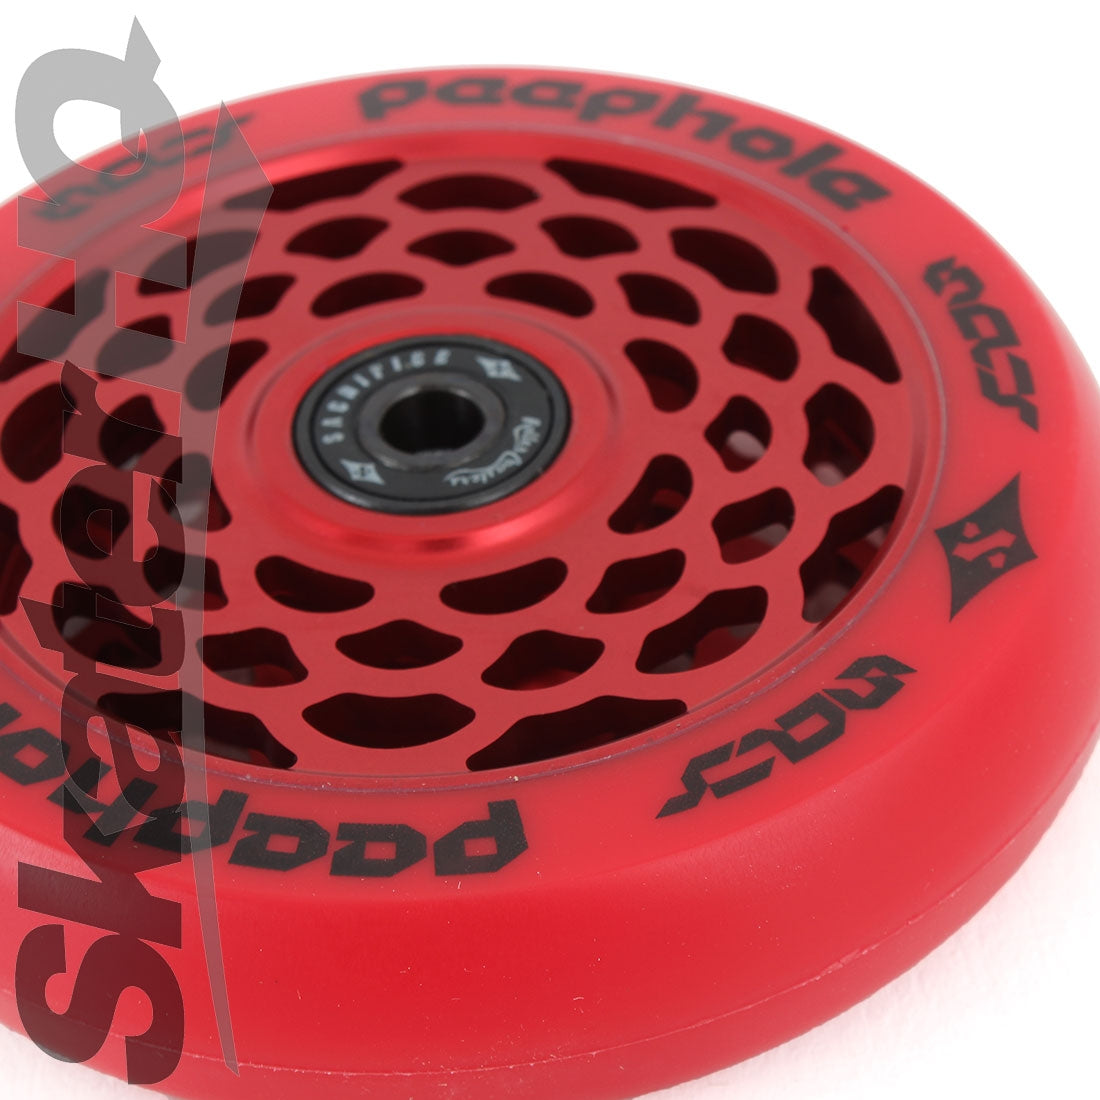 Sacrifice Spy PeepHole 110mm Wheel - All Red Scooter Wheels